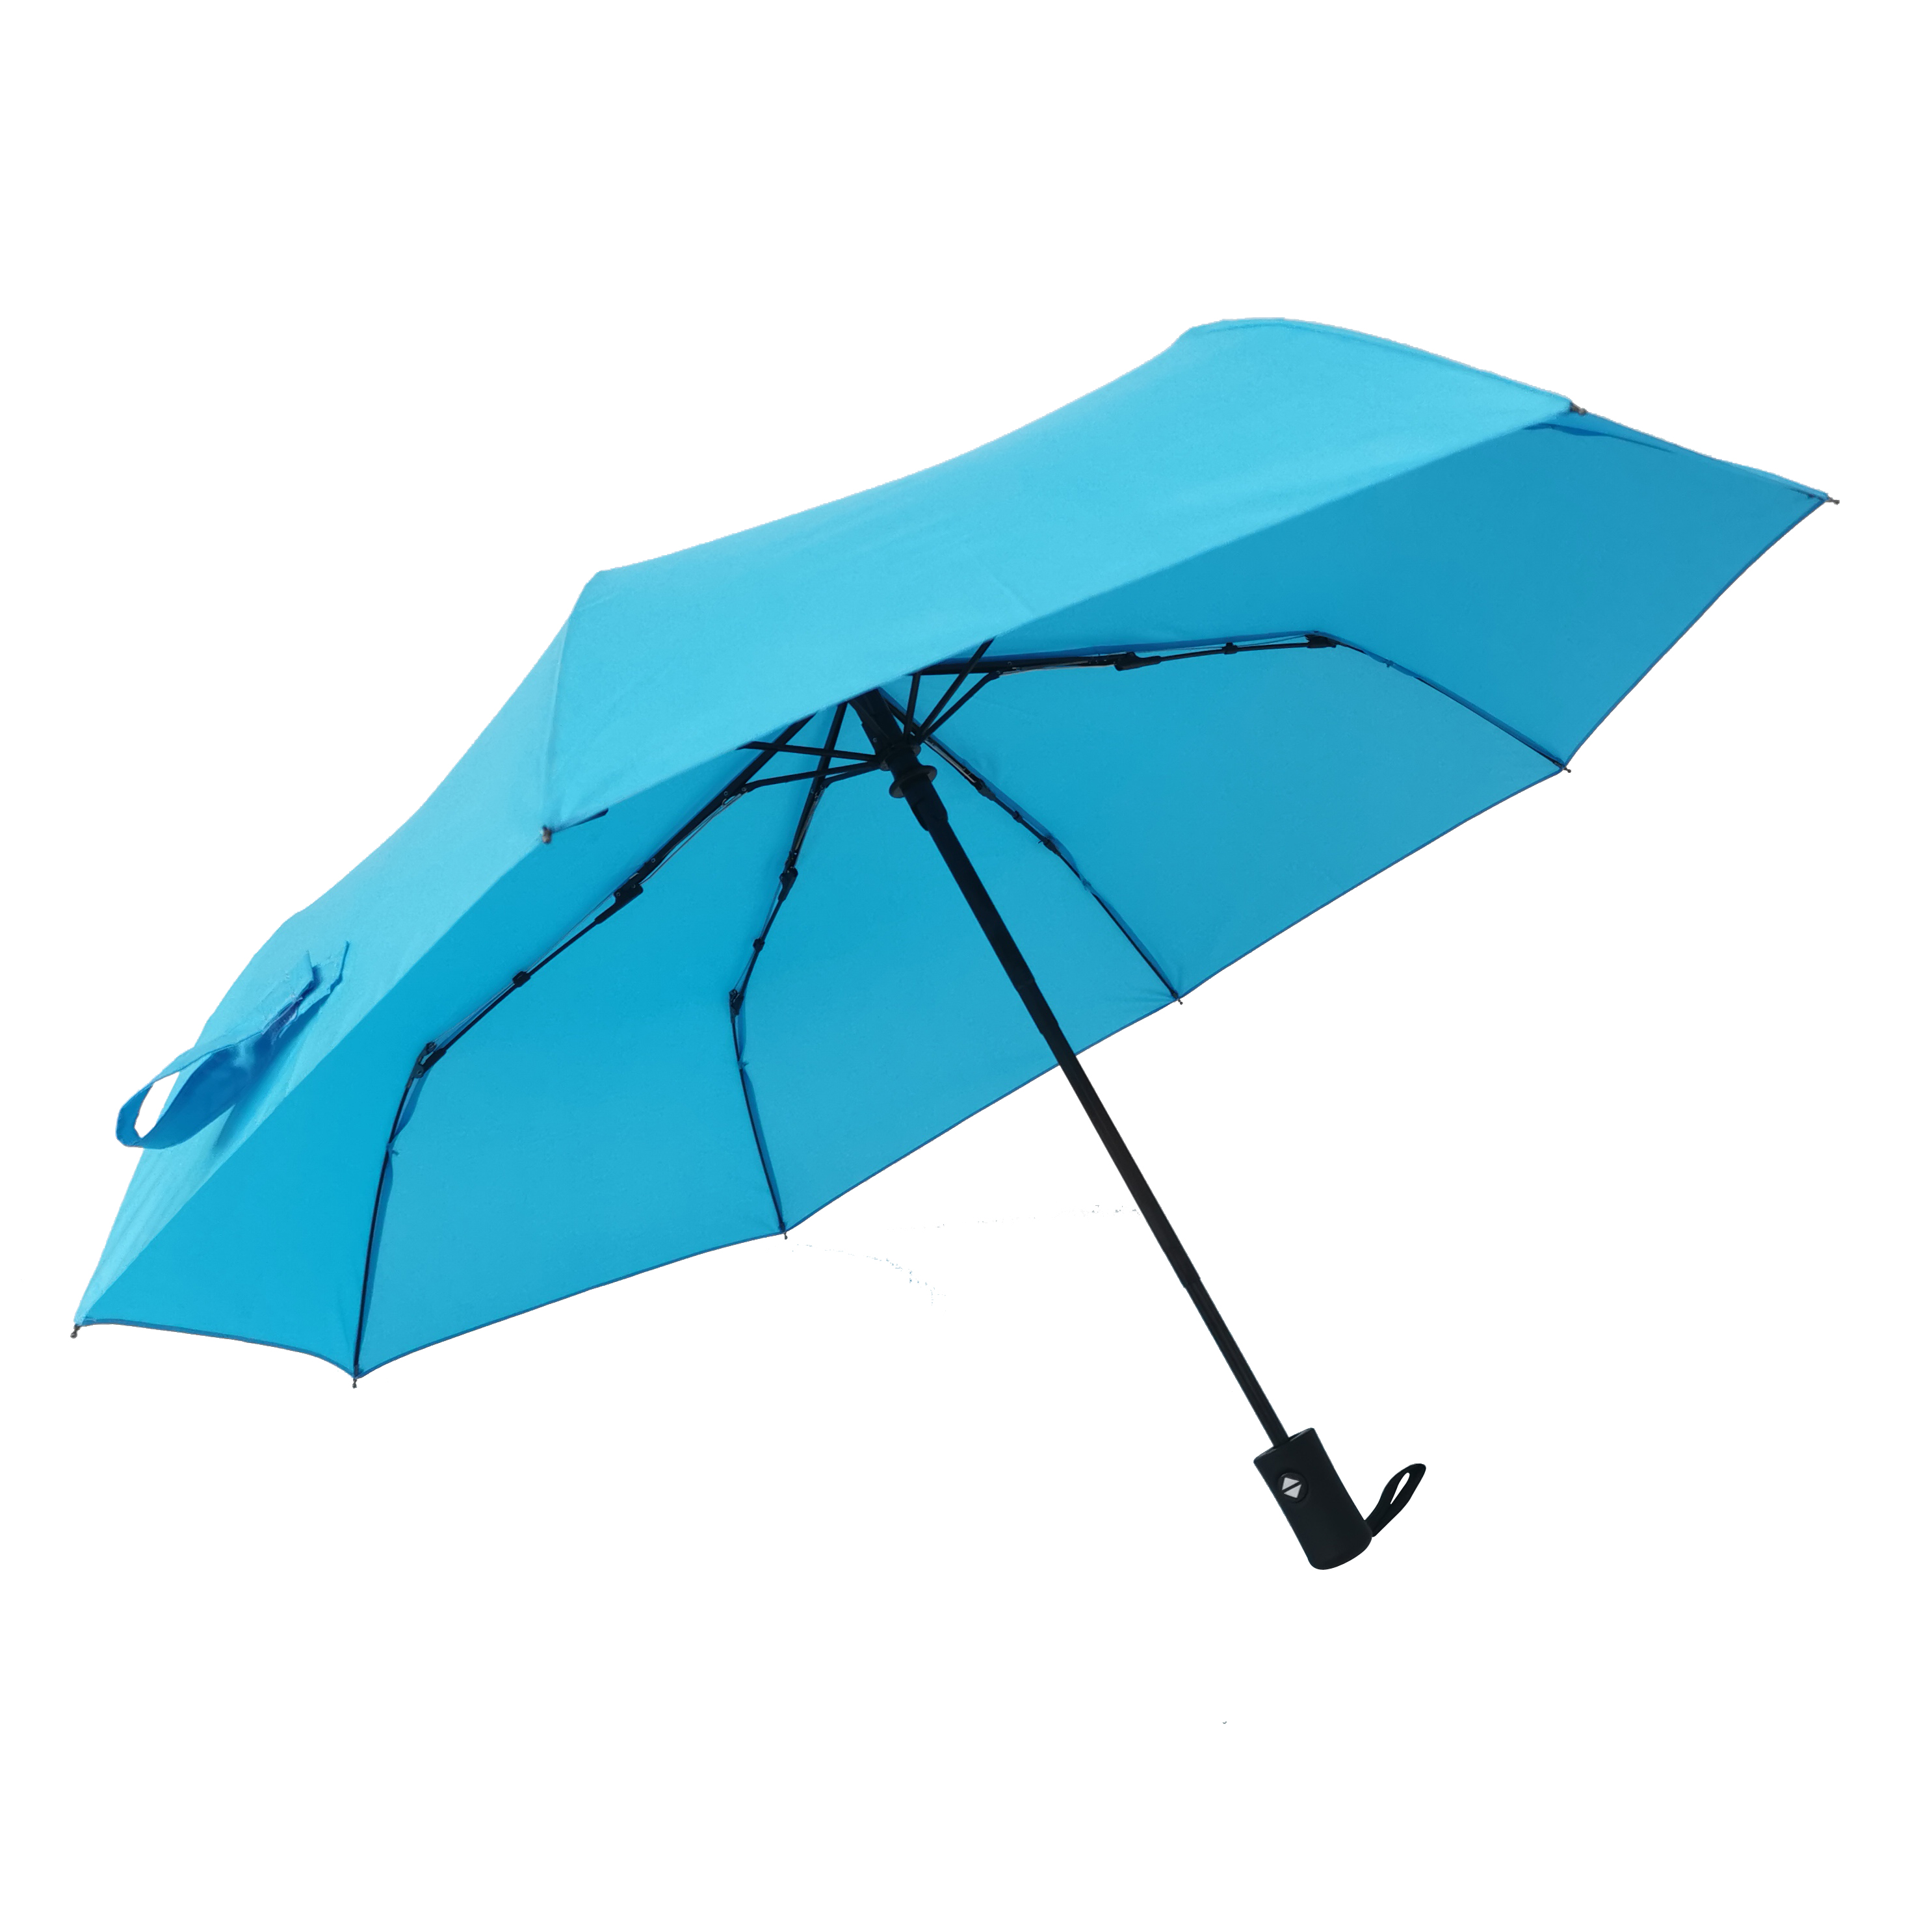 https://www.hodaumbrella.com/21-customization-fully-automatic-3-folding-sunrain-umbrella-for-adult-polyester-pongee-plastic-handle-6k-8k-product/